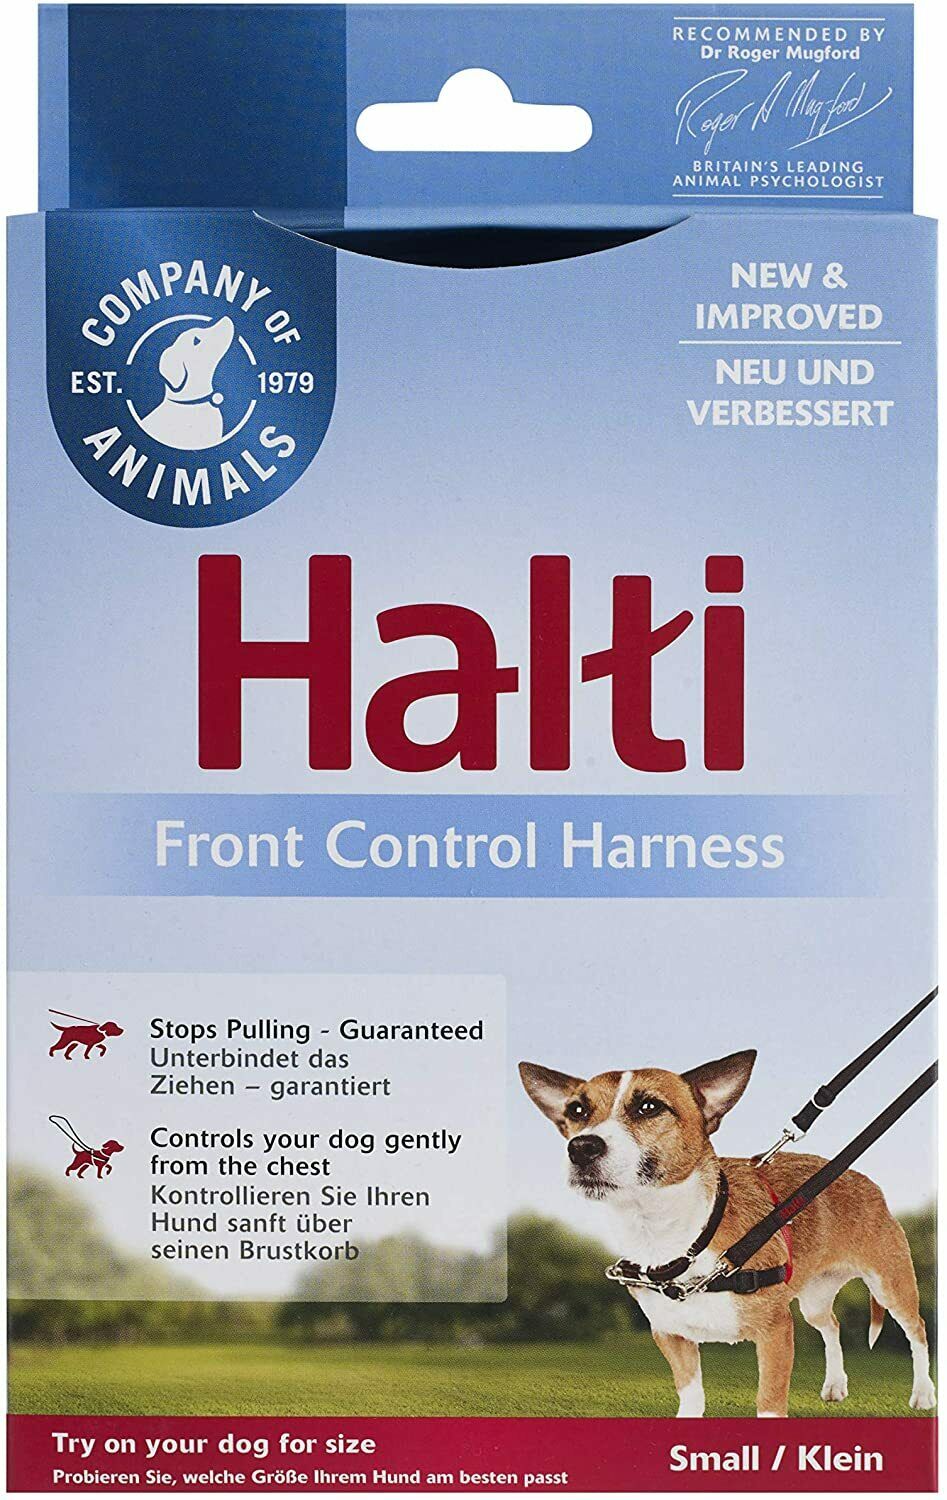 Halti Front Control Harness